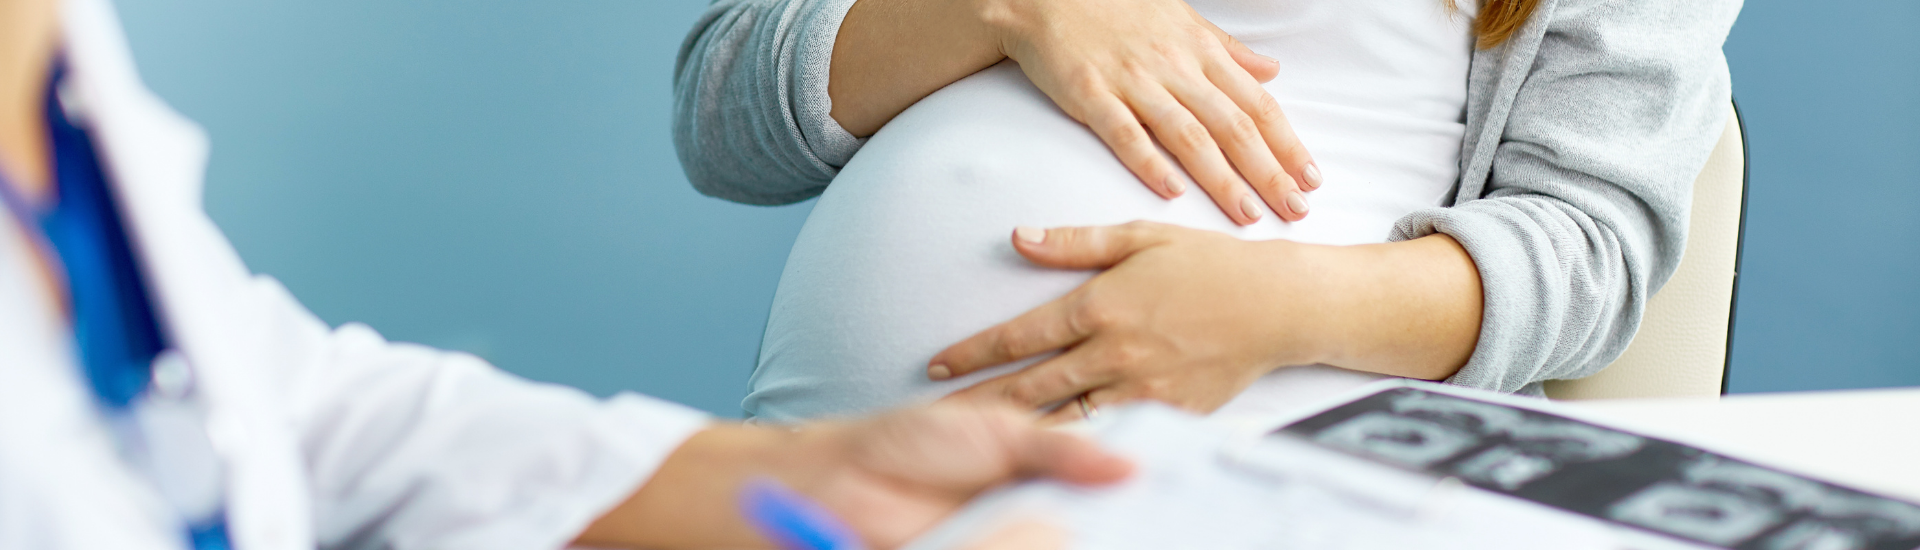 Esame PrenatalSAFE® Medical Group - Formato Desktop